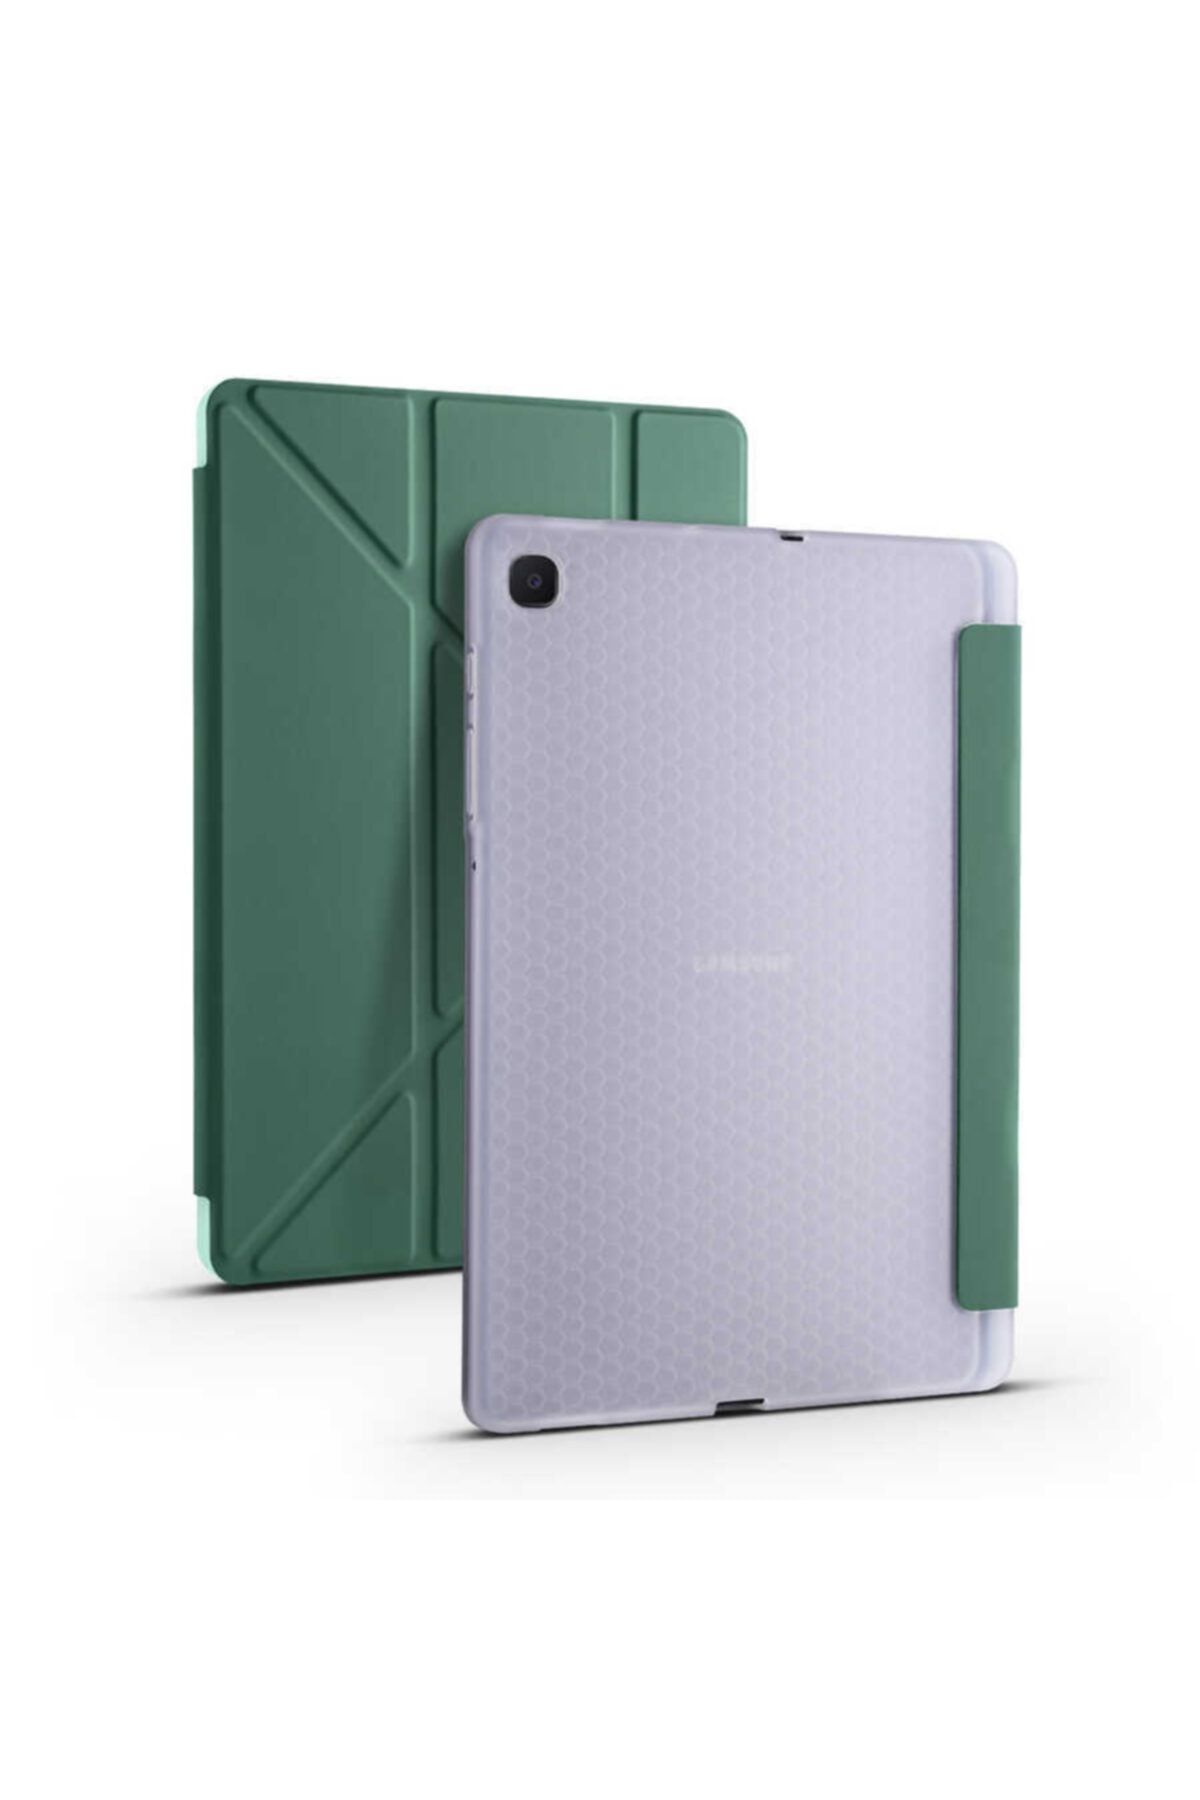 Zore Samsung Galaxy Tab S6 Lite P610 Tablet Kılıfı Standlı Kalem Yuvalı Kapaklı Esnek Silikon Kapak